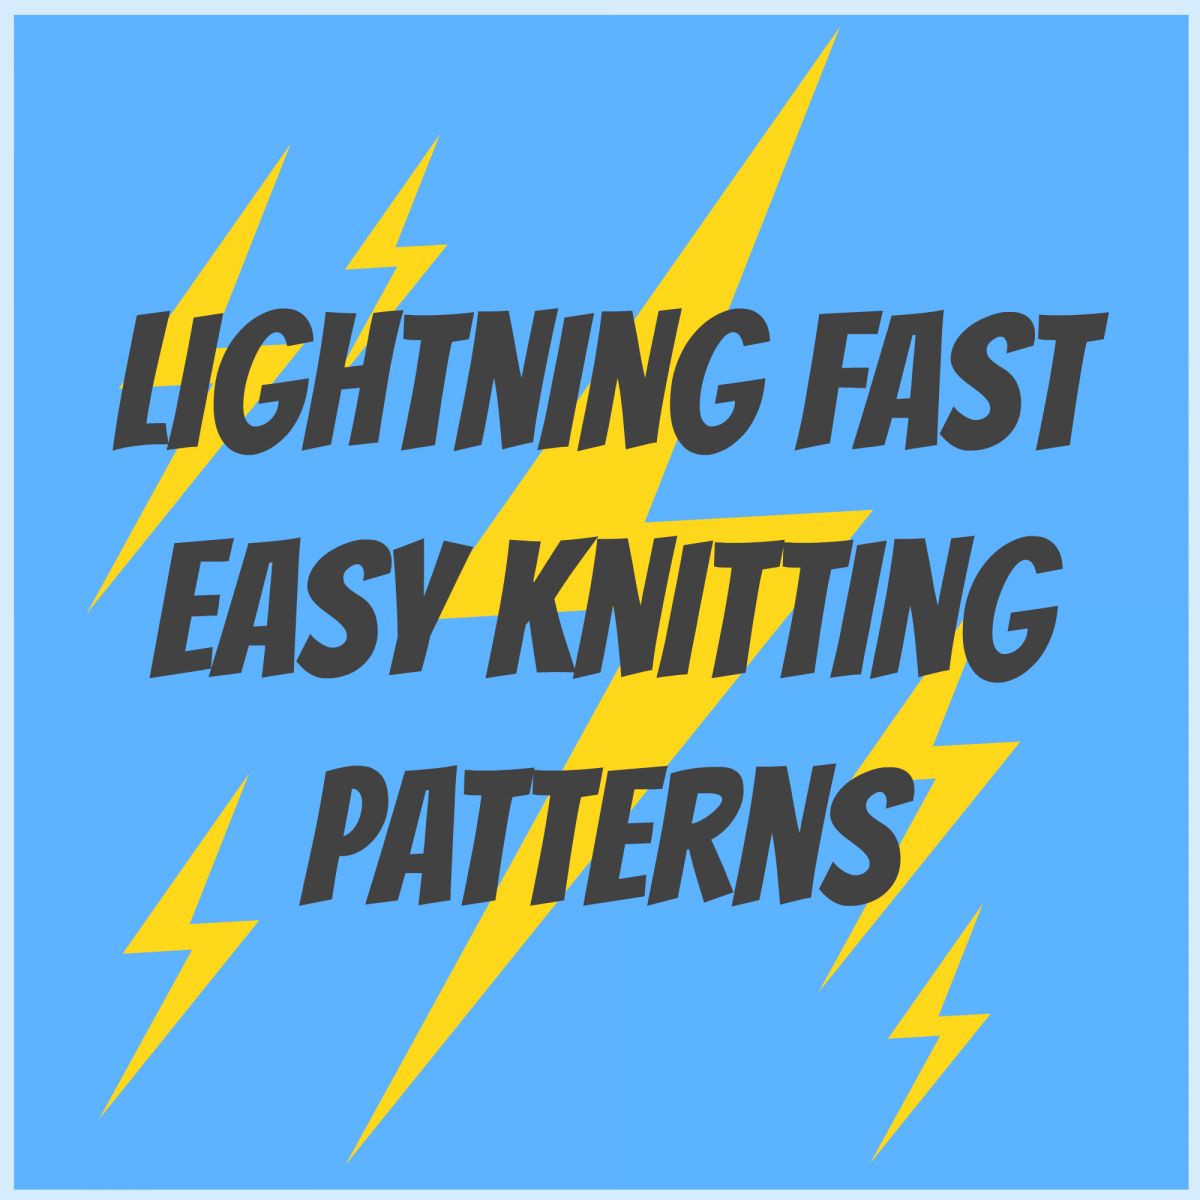 8 Lightning Fast Easy Knitting Patterns 